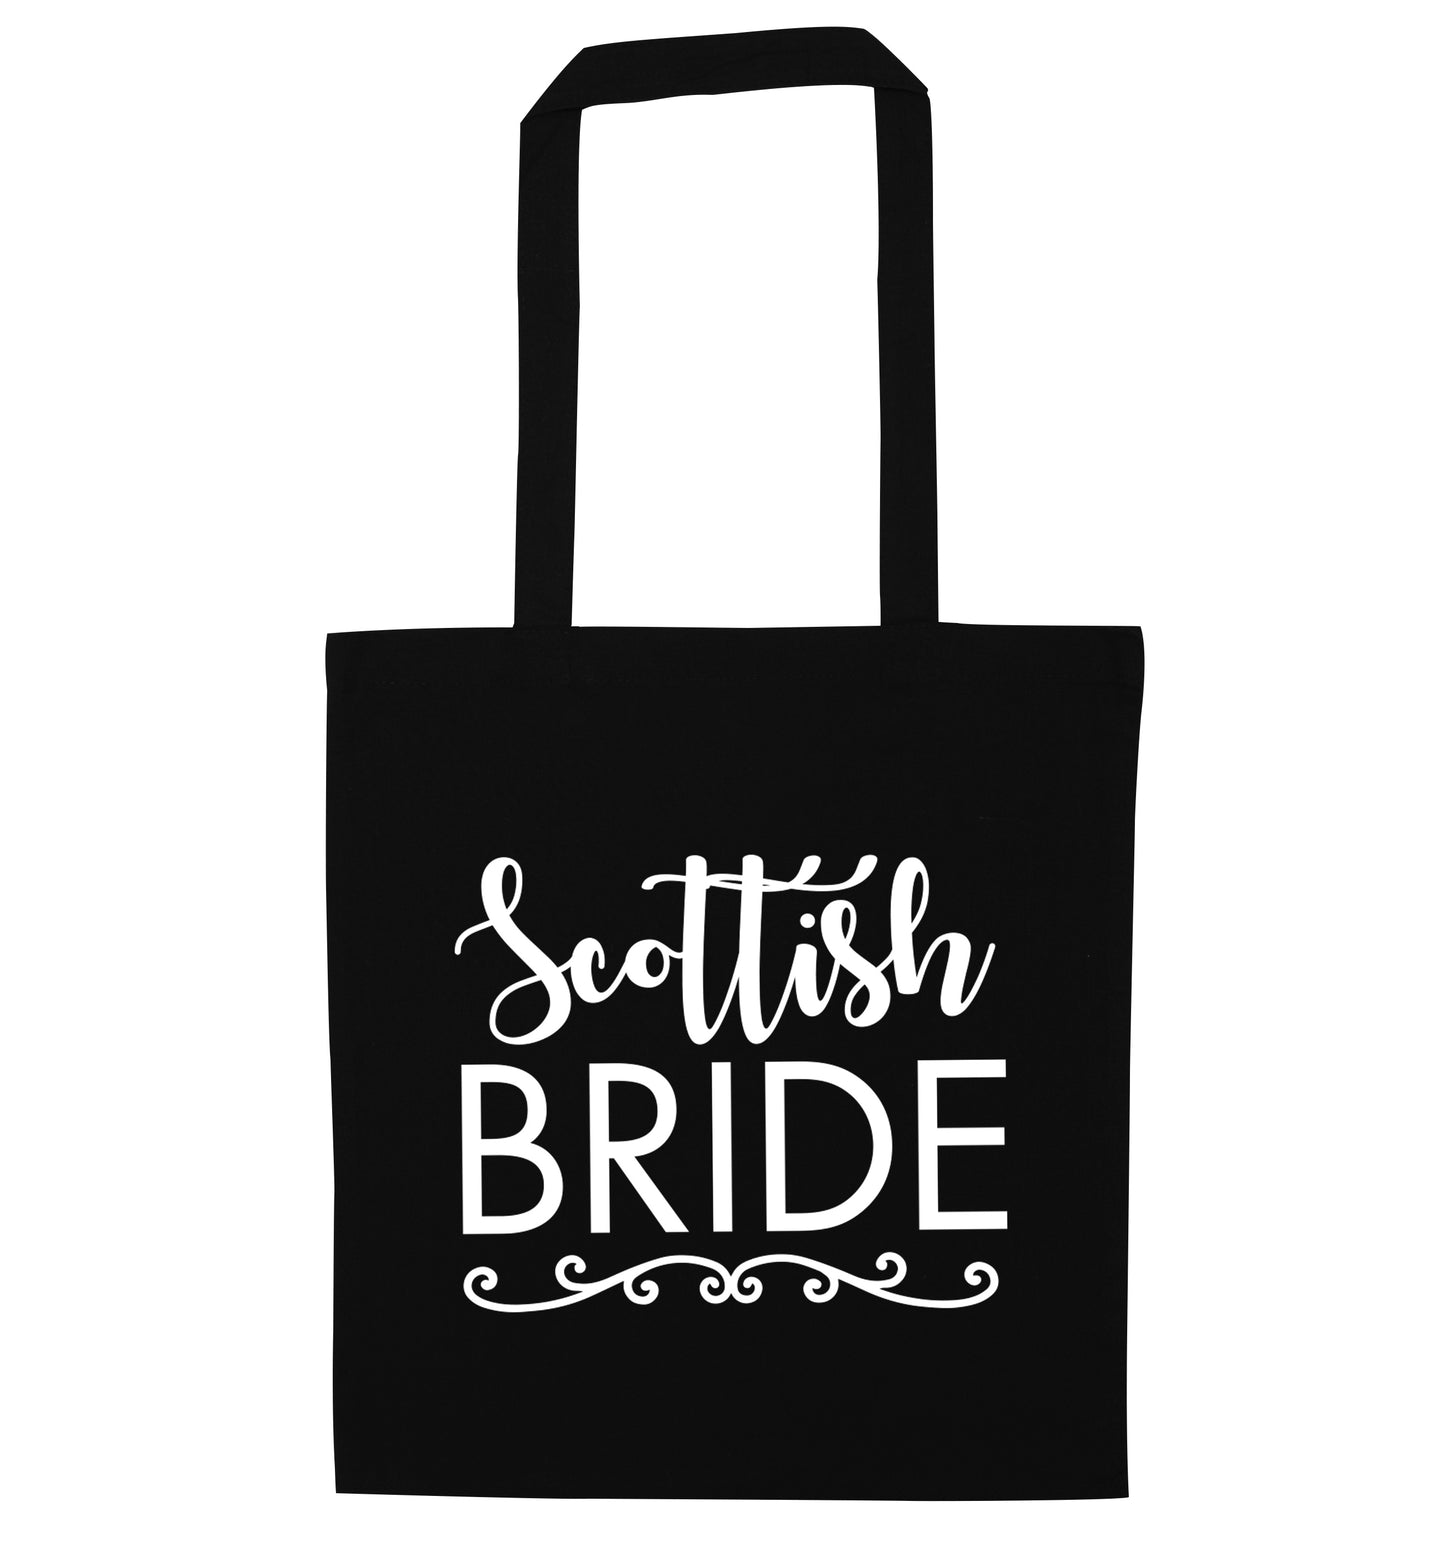 Scottish Bride black tote bag